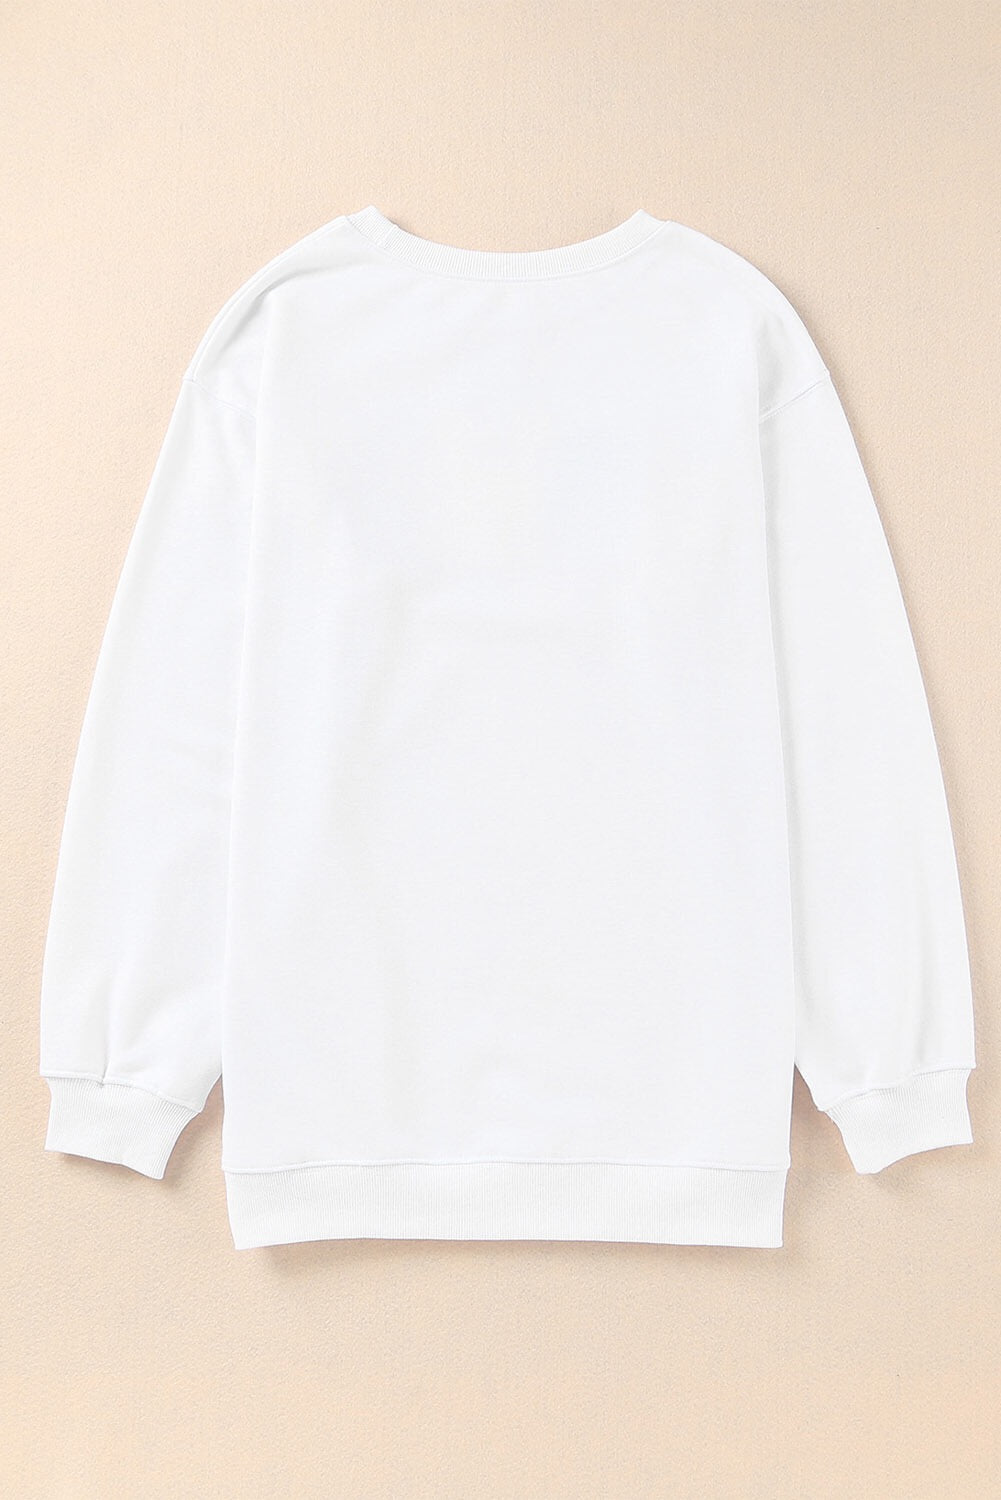 White HOWDY Letter Color Block Print Oversized Sweatshirt